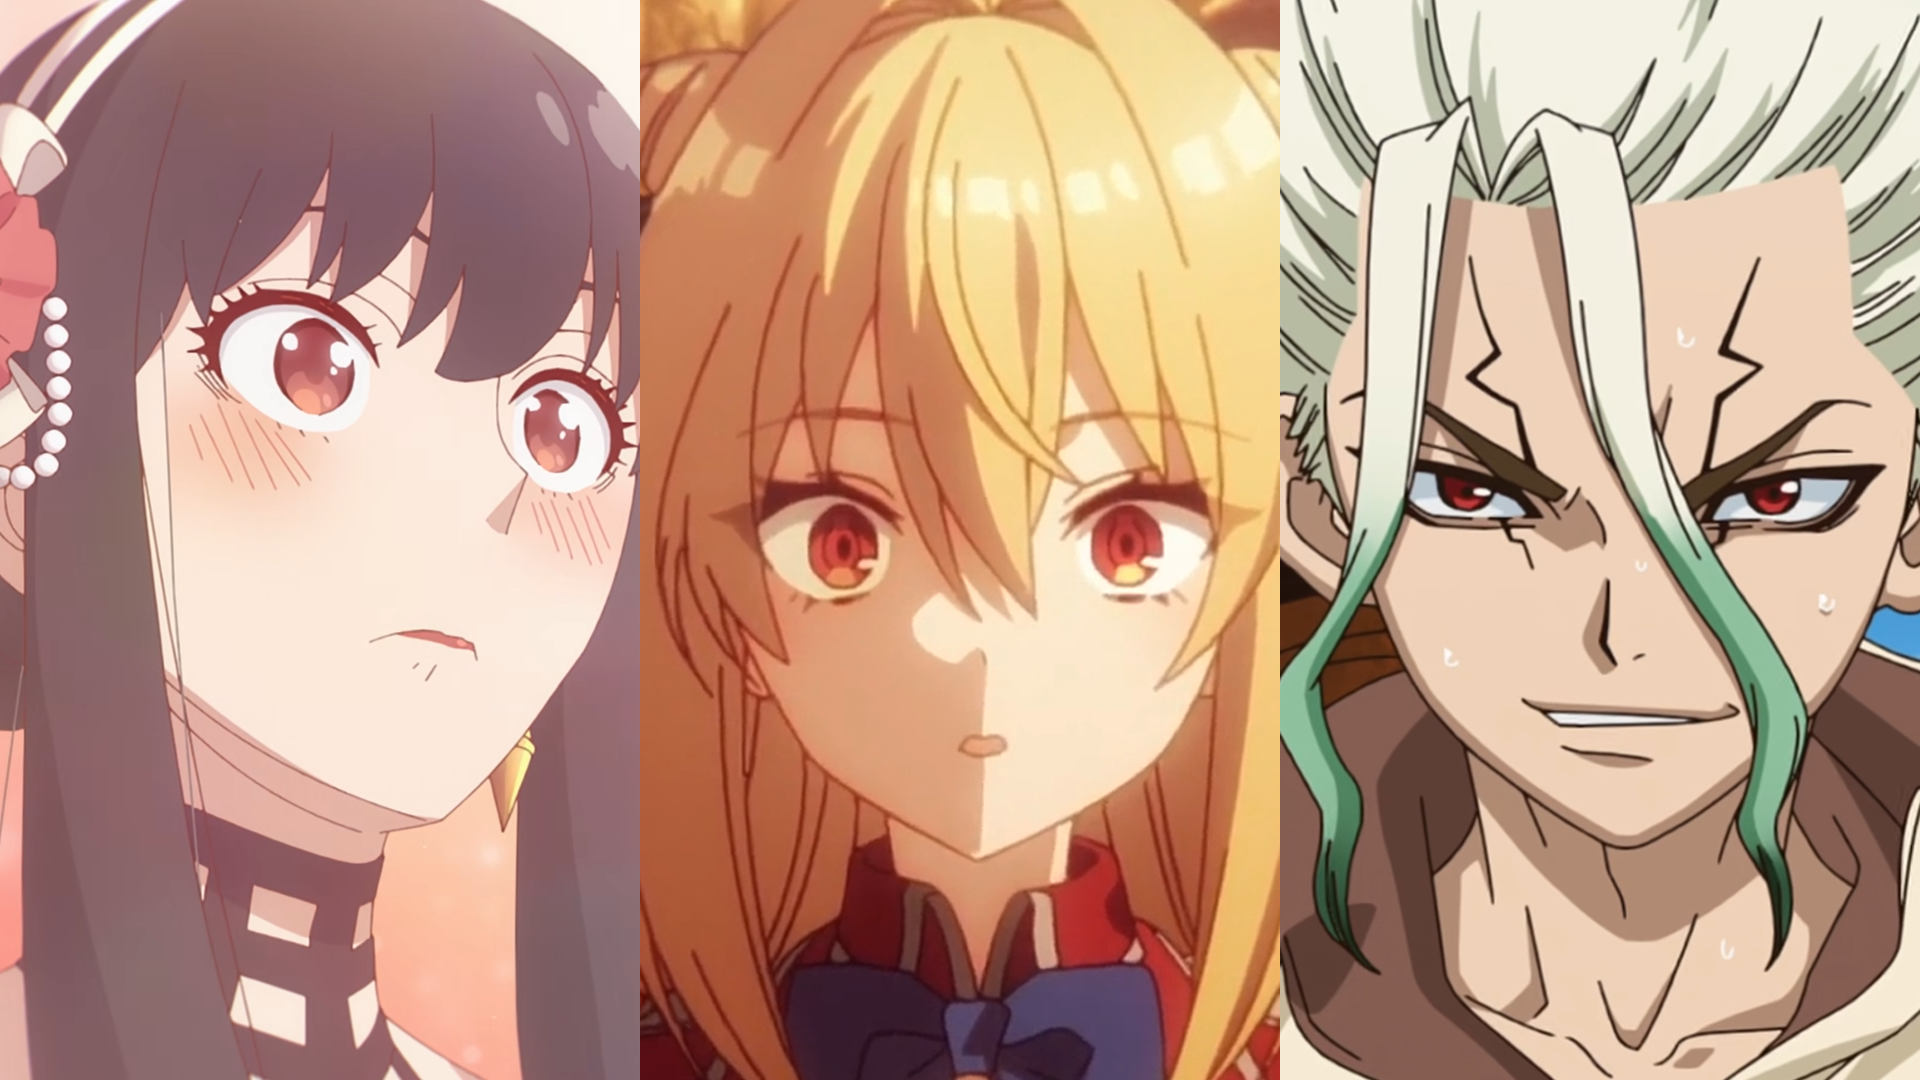 Anime Saiko - Anime News Research - Winter Anime 2021